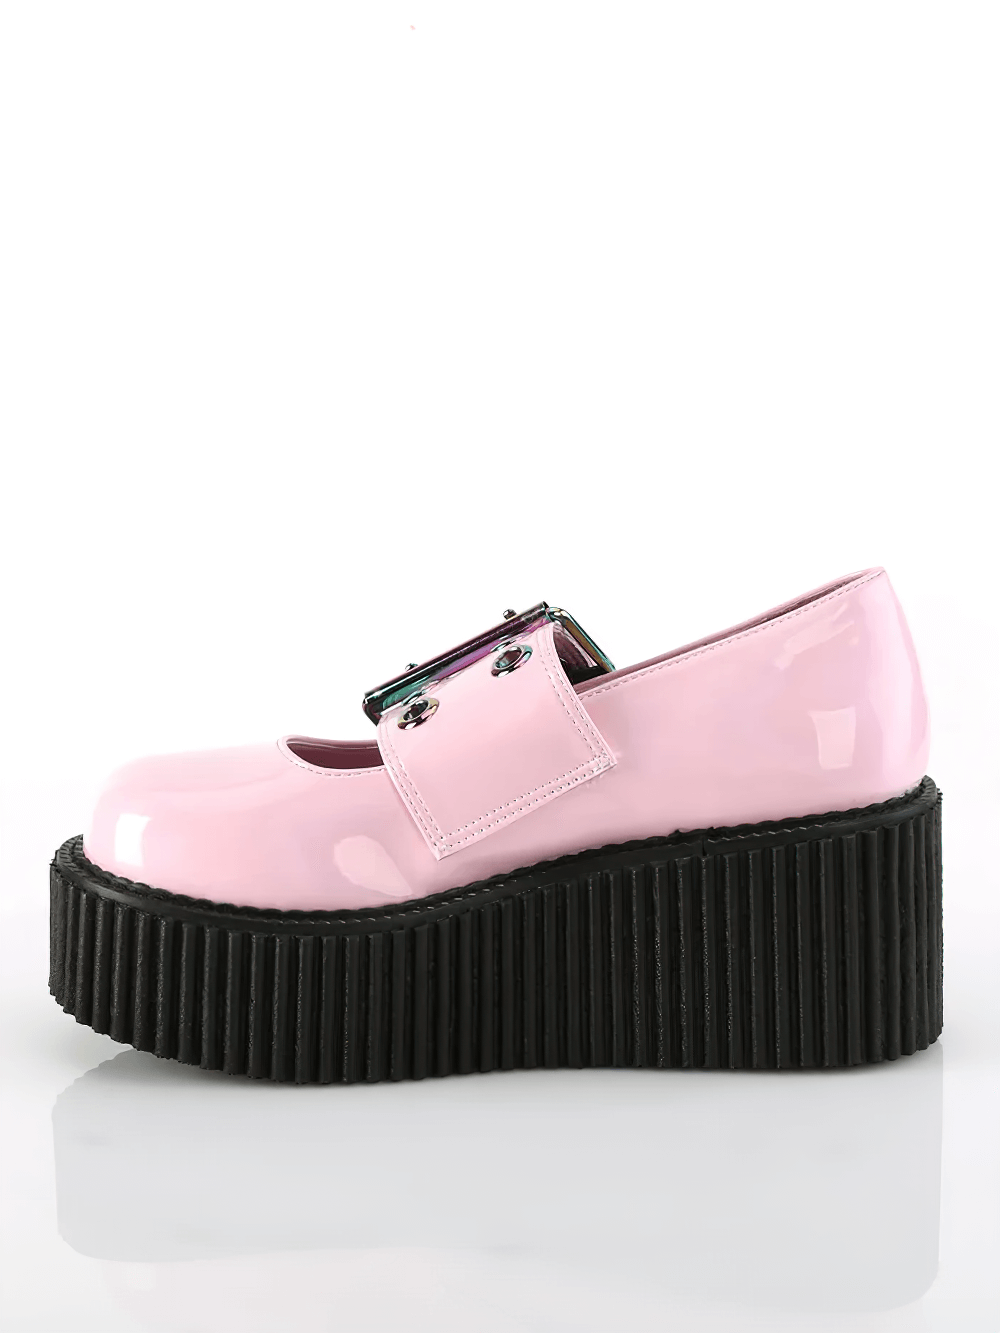 DEMONIA Pink Platform Mary Jane Shoes with Rainbow Buckle